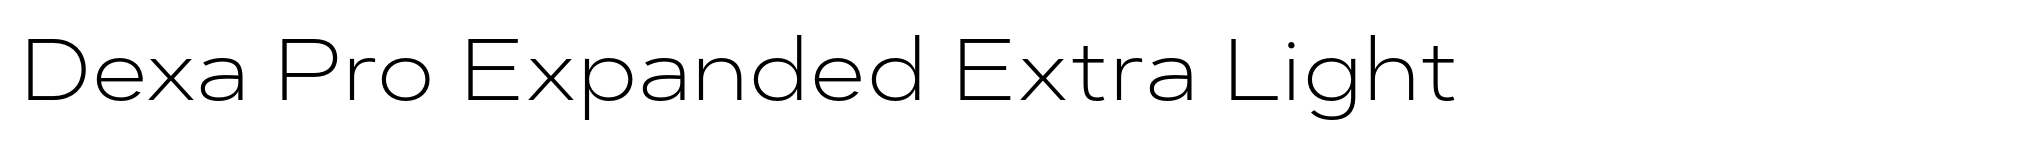 Dexa Pro Expanded Extra Light image